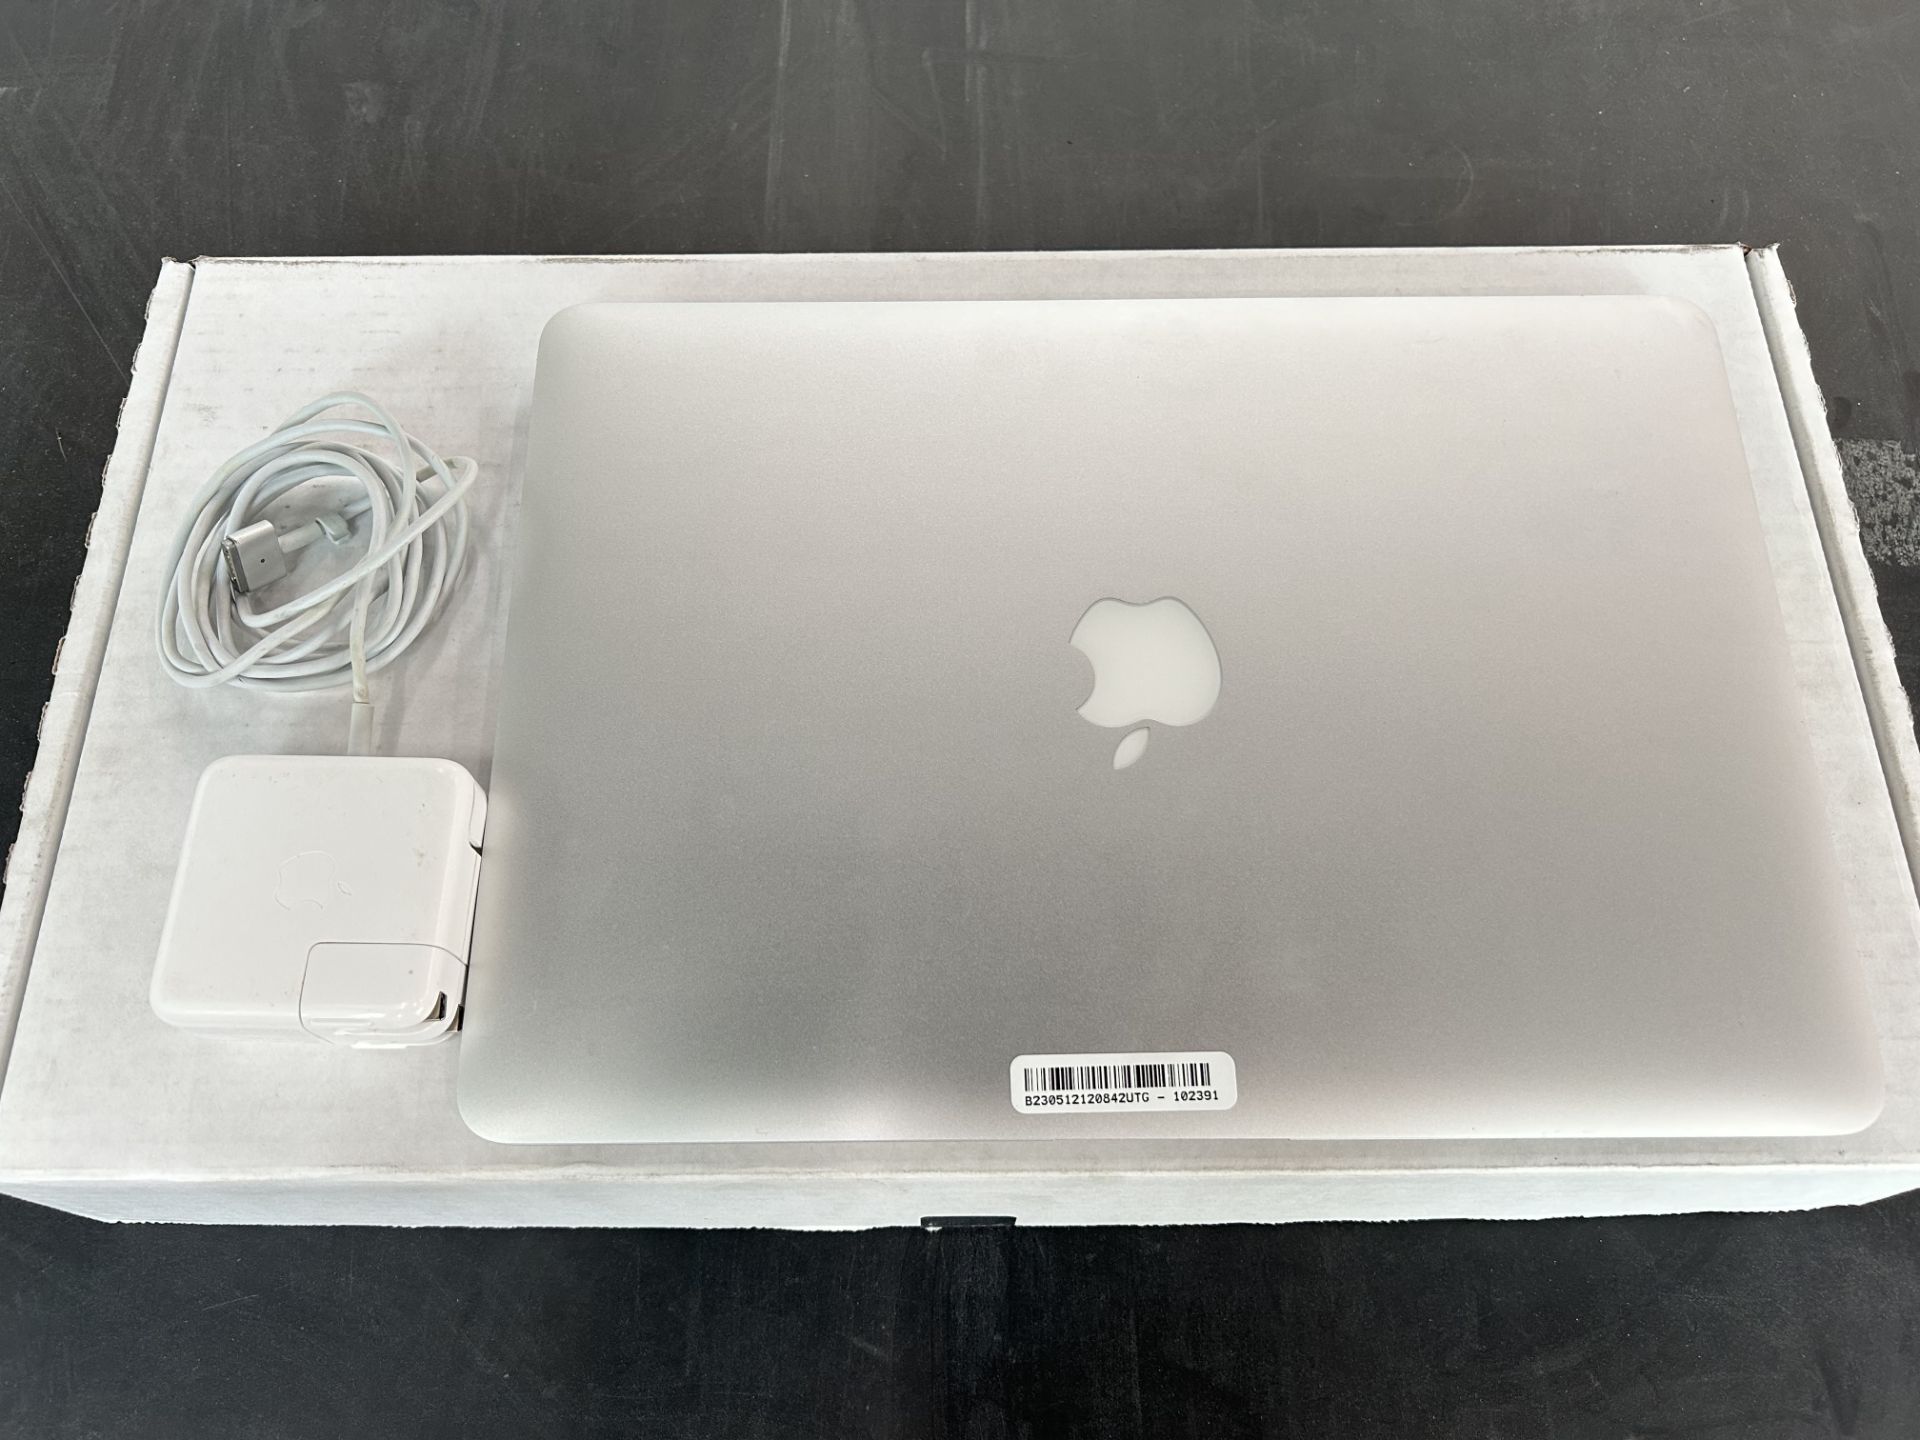 Computadora Apple MacBook Air 2017 Modelo A1466, Serie FVFD34QDJ1WK, Core i5, 8 Gb RAM, 128 SSD, Co - Image 4 of 7